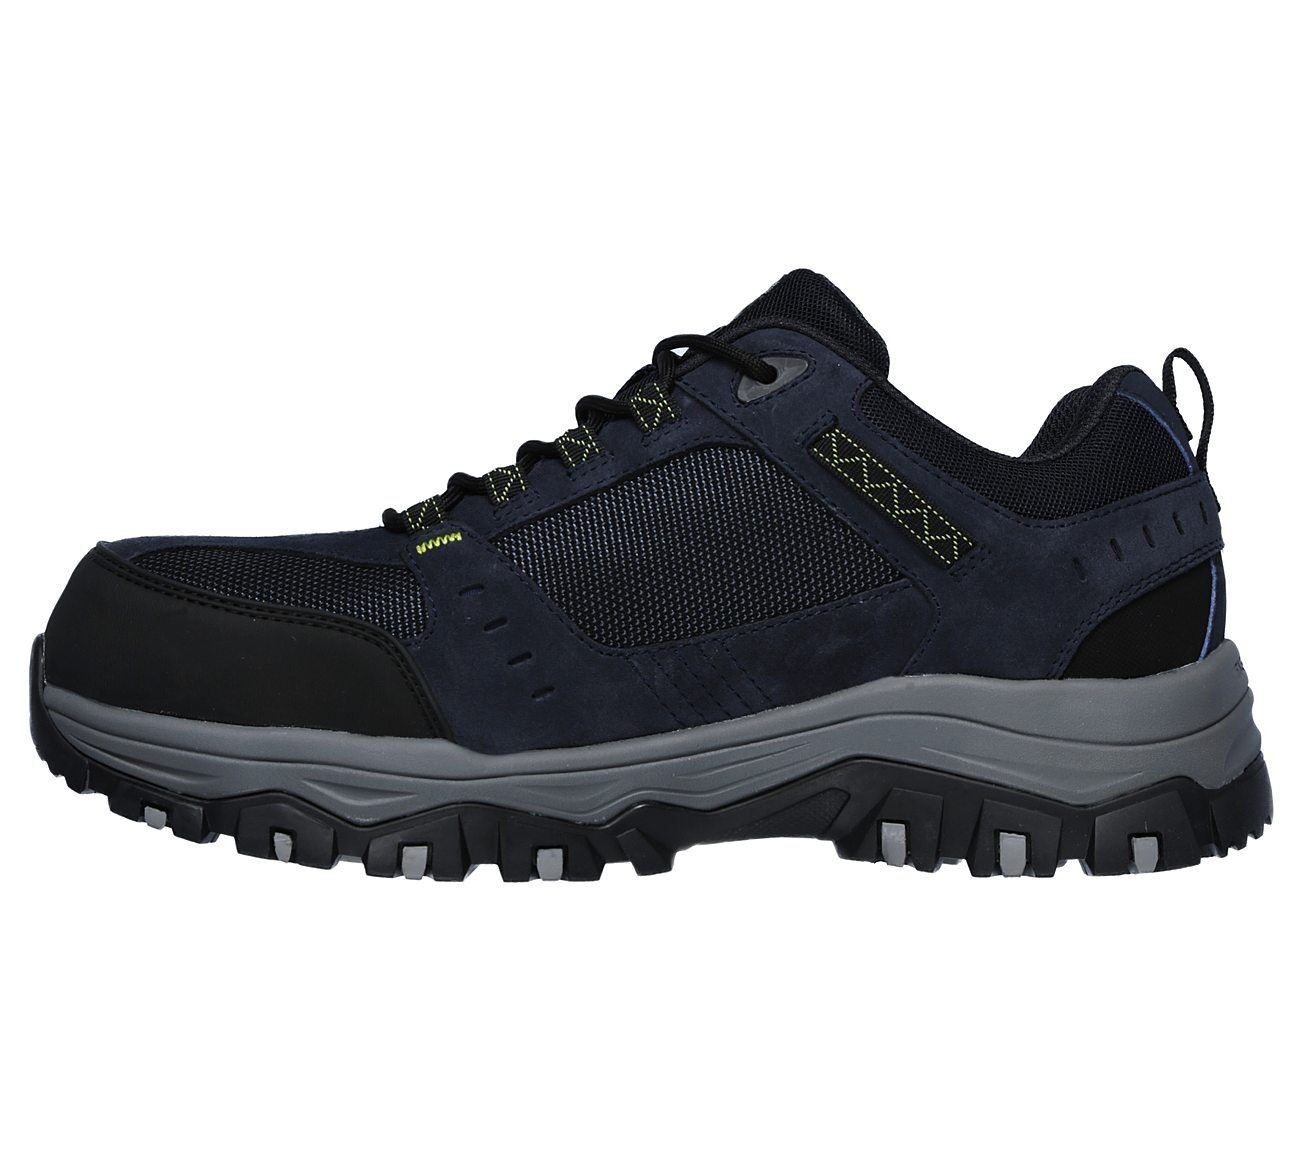 Men's Greetah Lace Comp Toe Waterproof Shoe